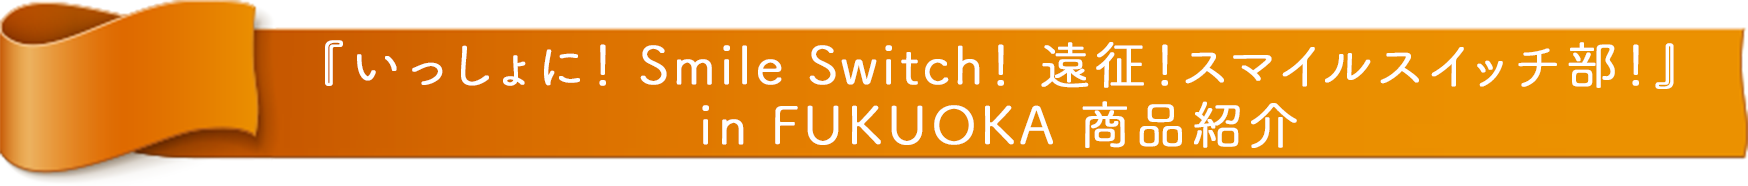 『FUJIYA いっしょに！ Smile Switch！ 遠征！スマイルスイッチ部！ in FUKUOKA』 商品紹介